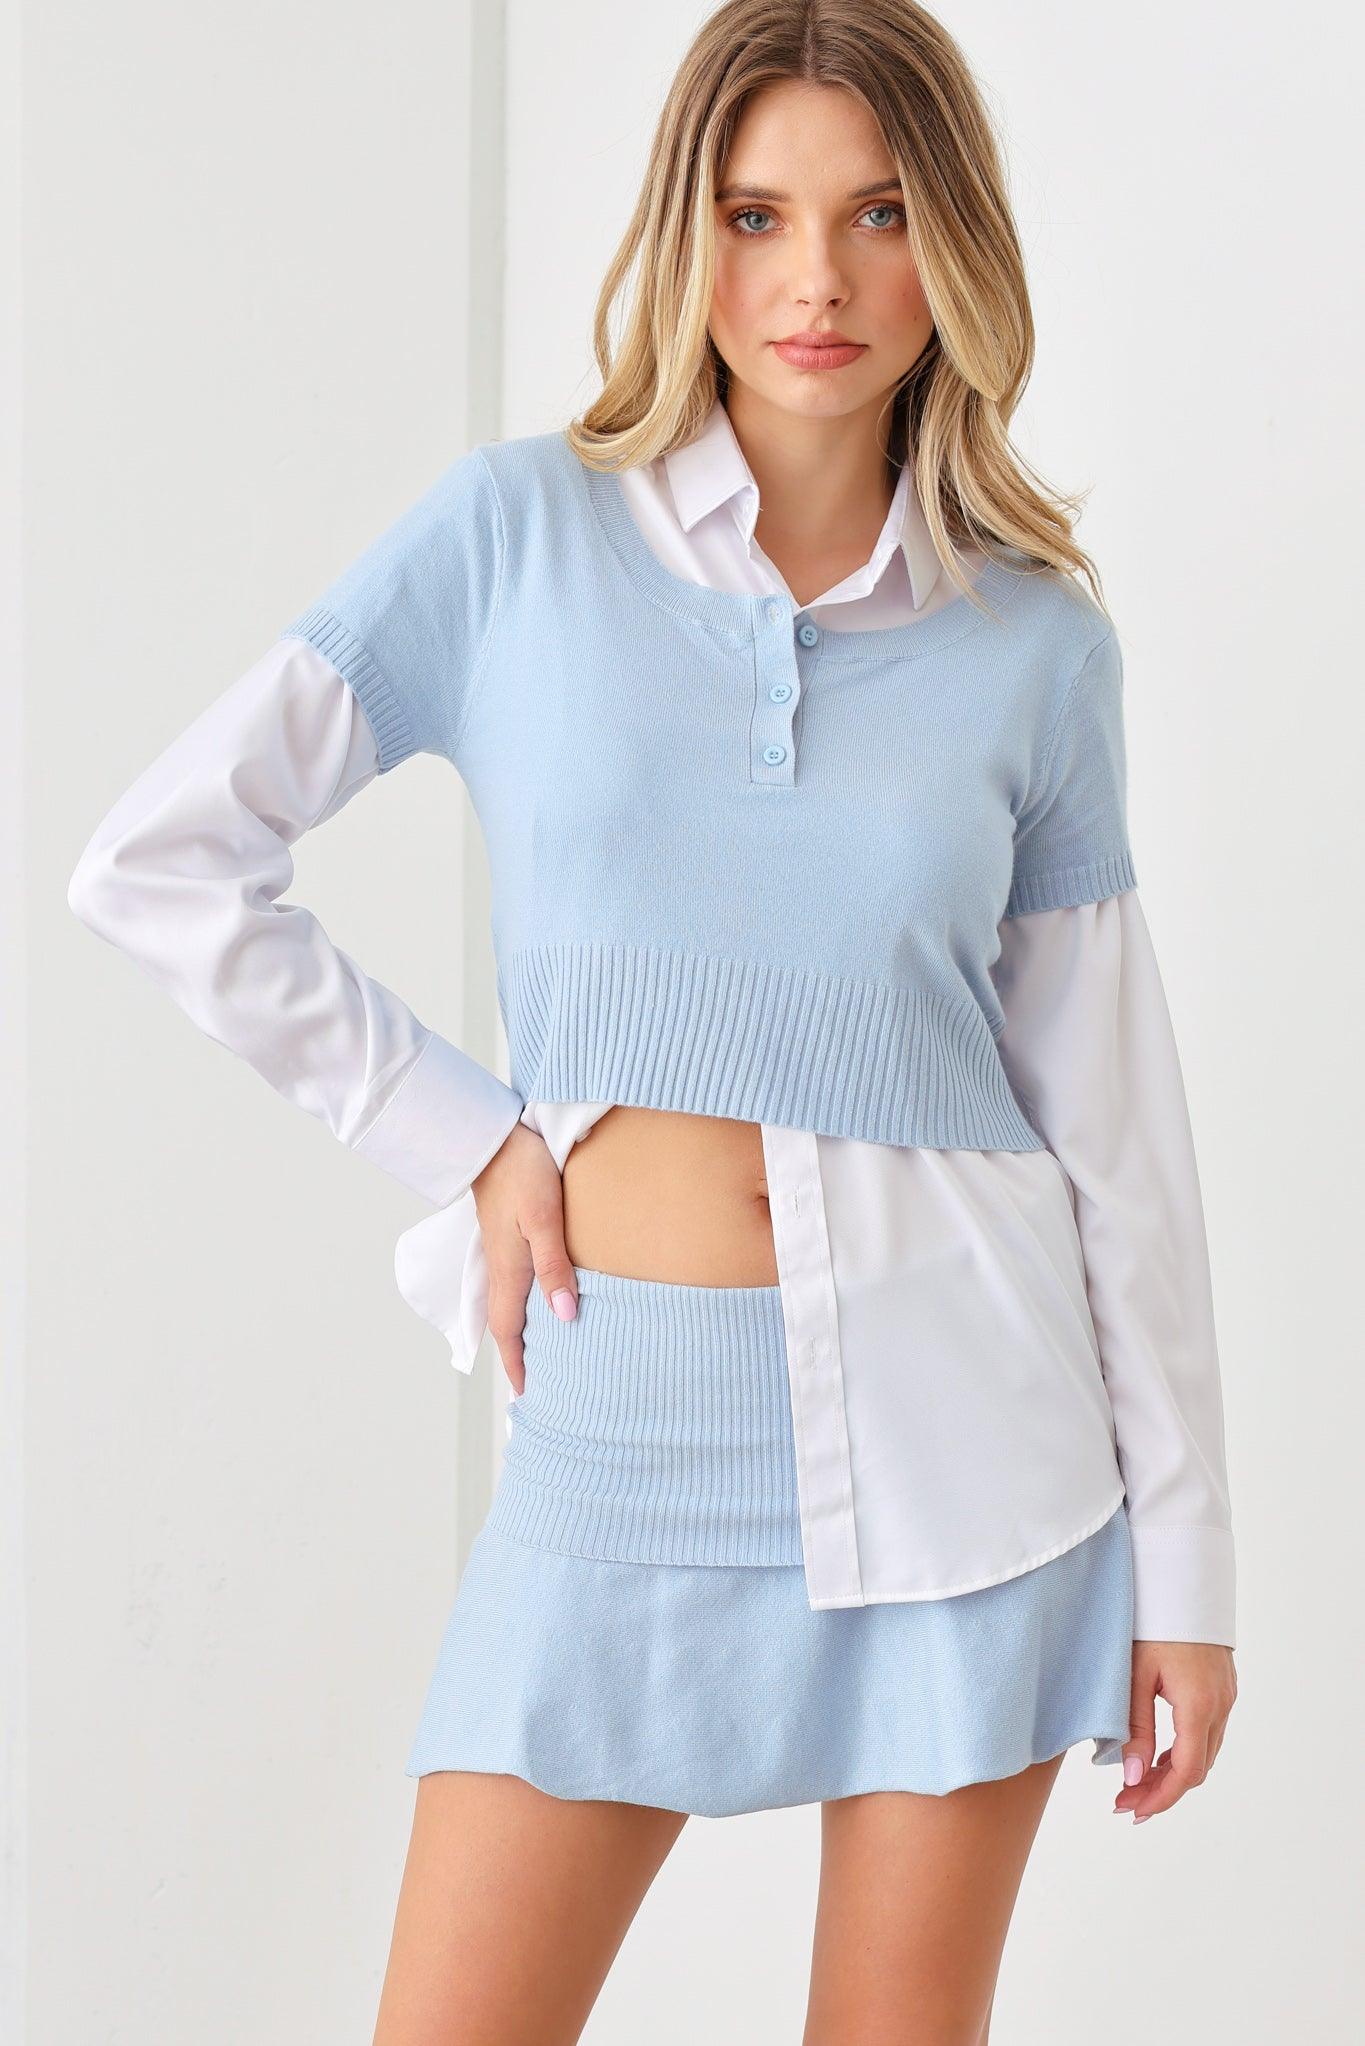 Sweater-Knit Short Sleeve Crop Top & Mini Skirt Set - Tasha Apparel